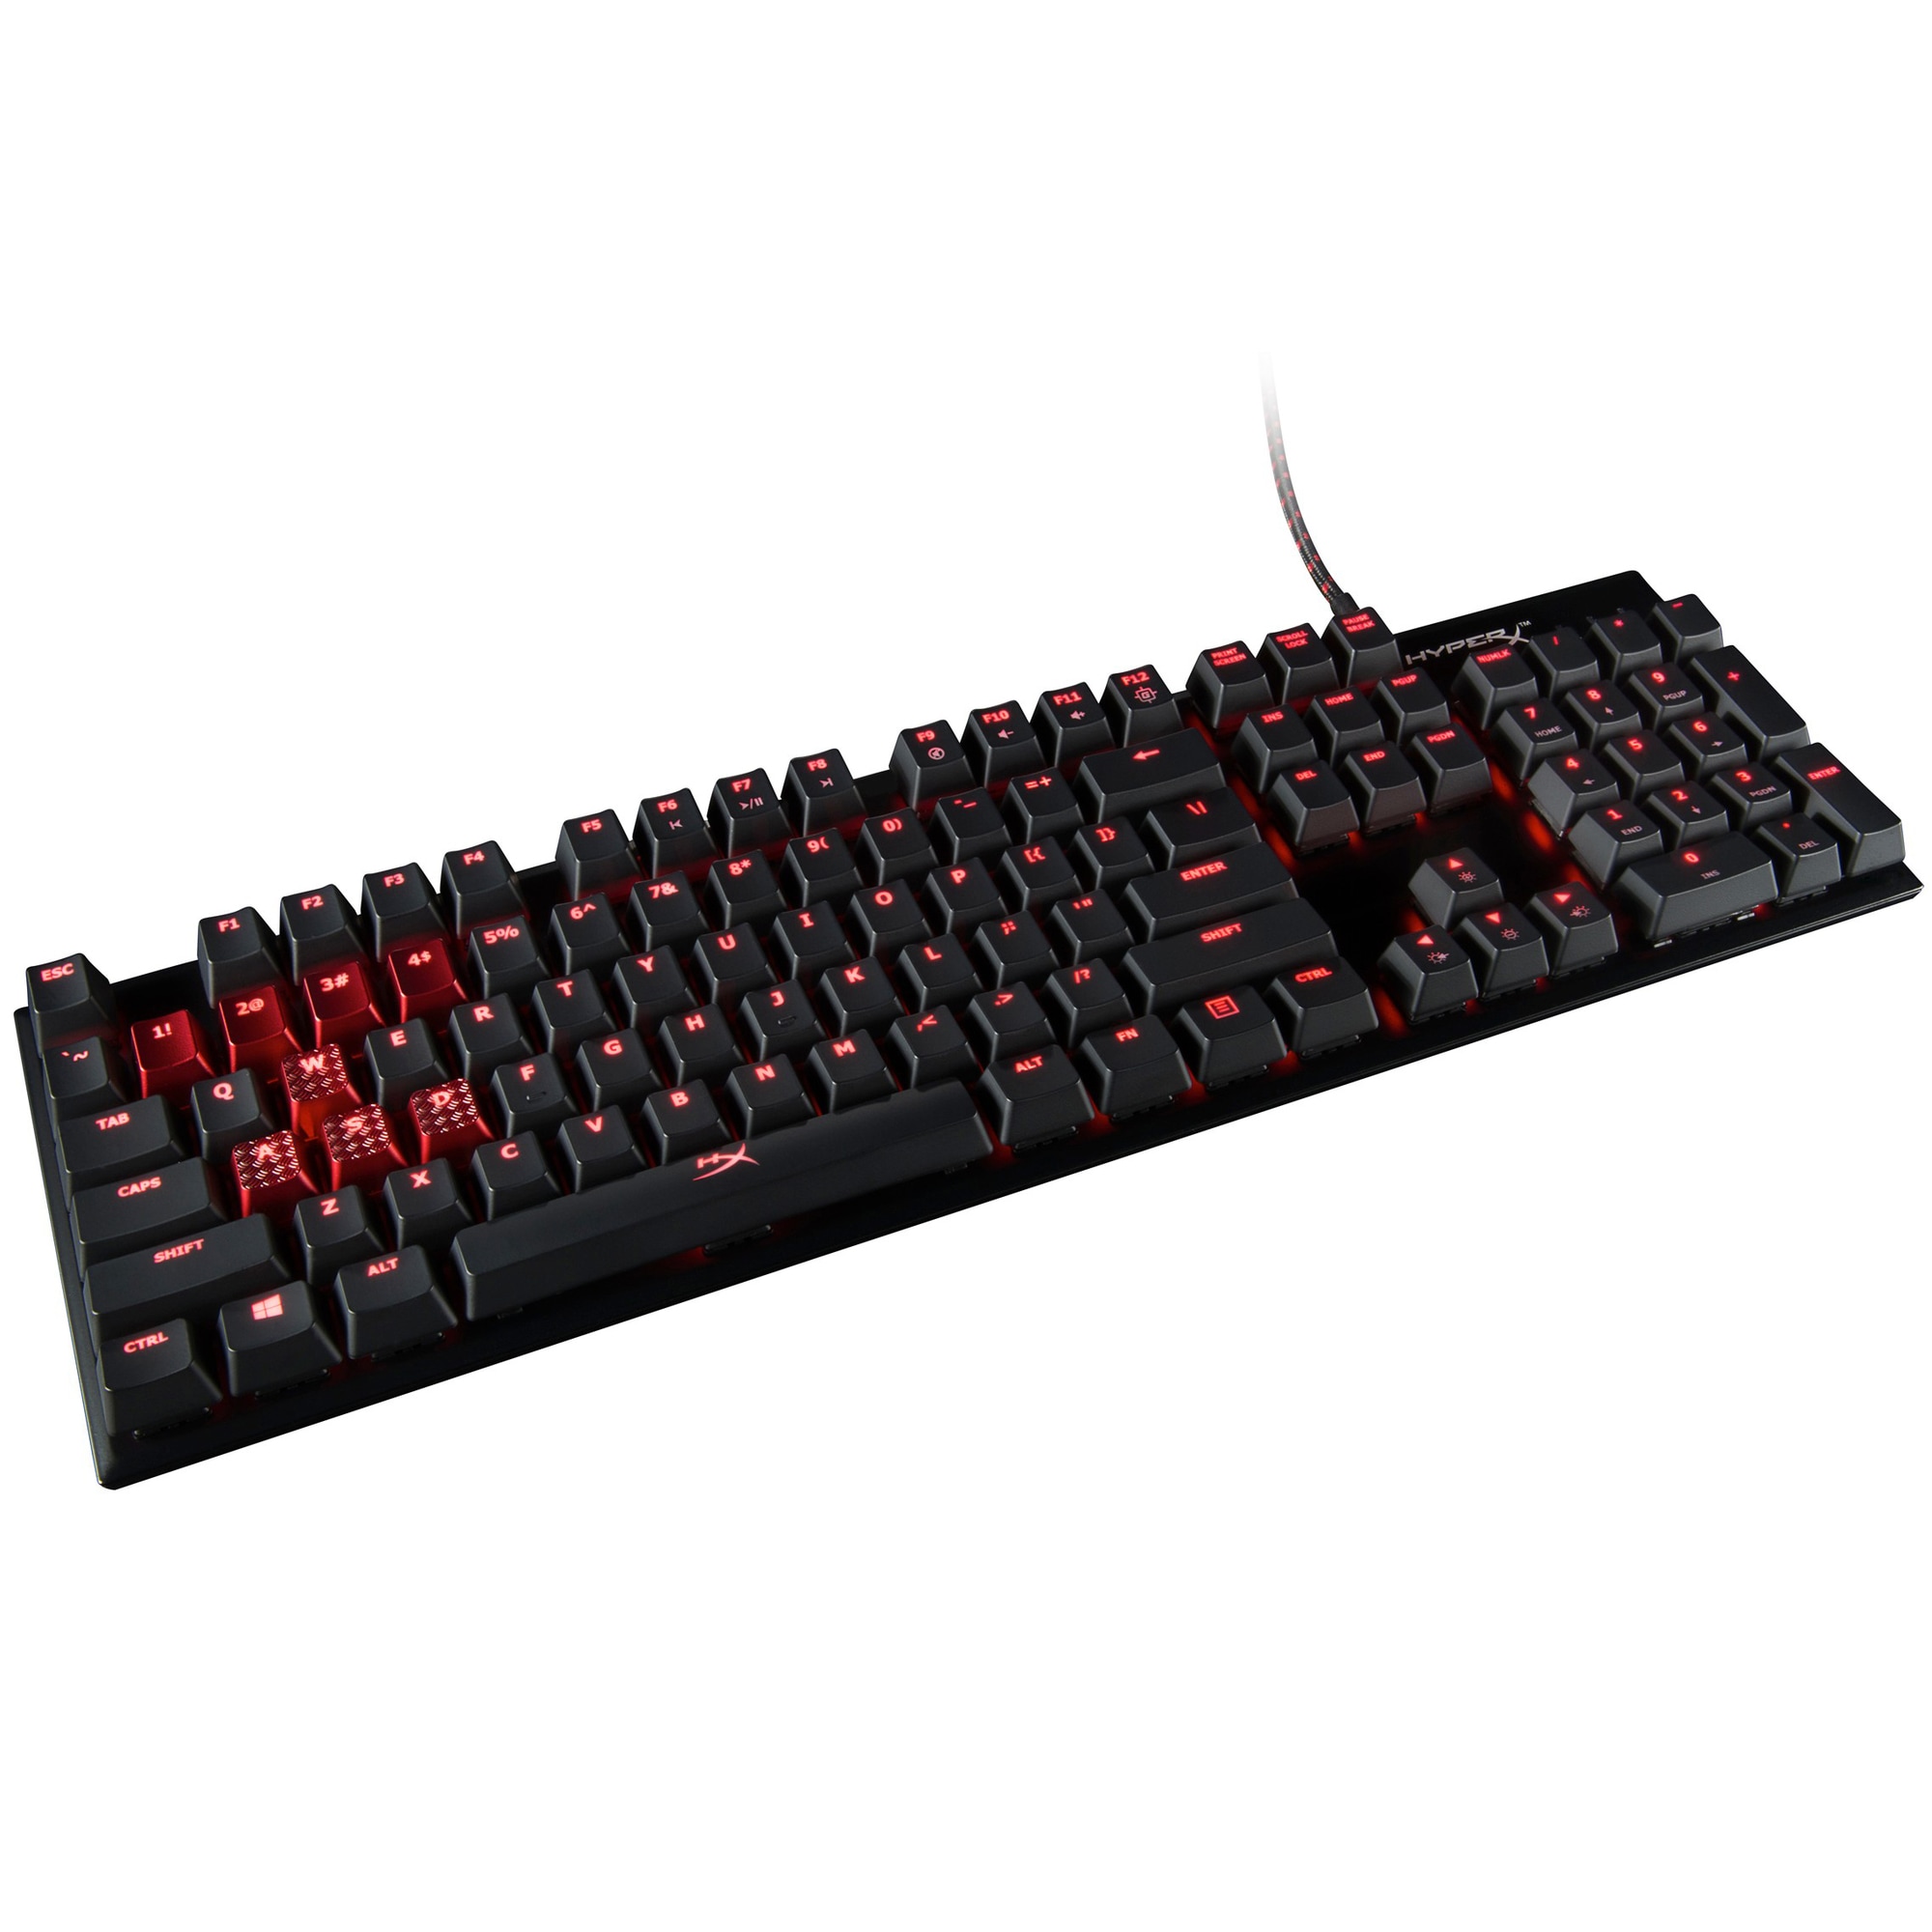 HyperX Alloy gamingtastatur MX Red (sort) - Elkjøp